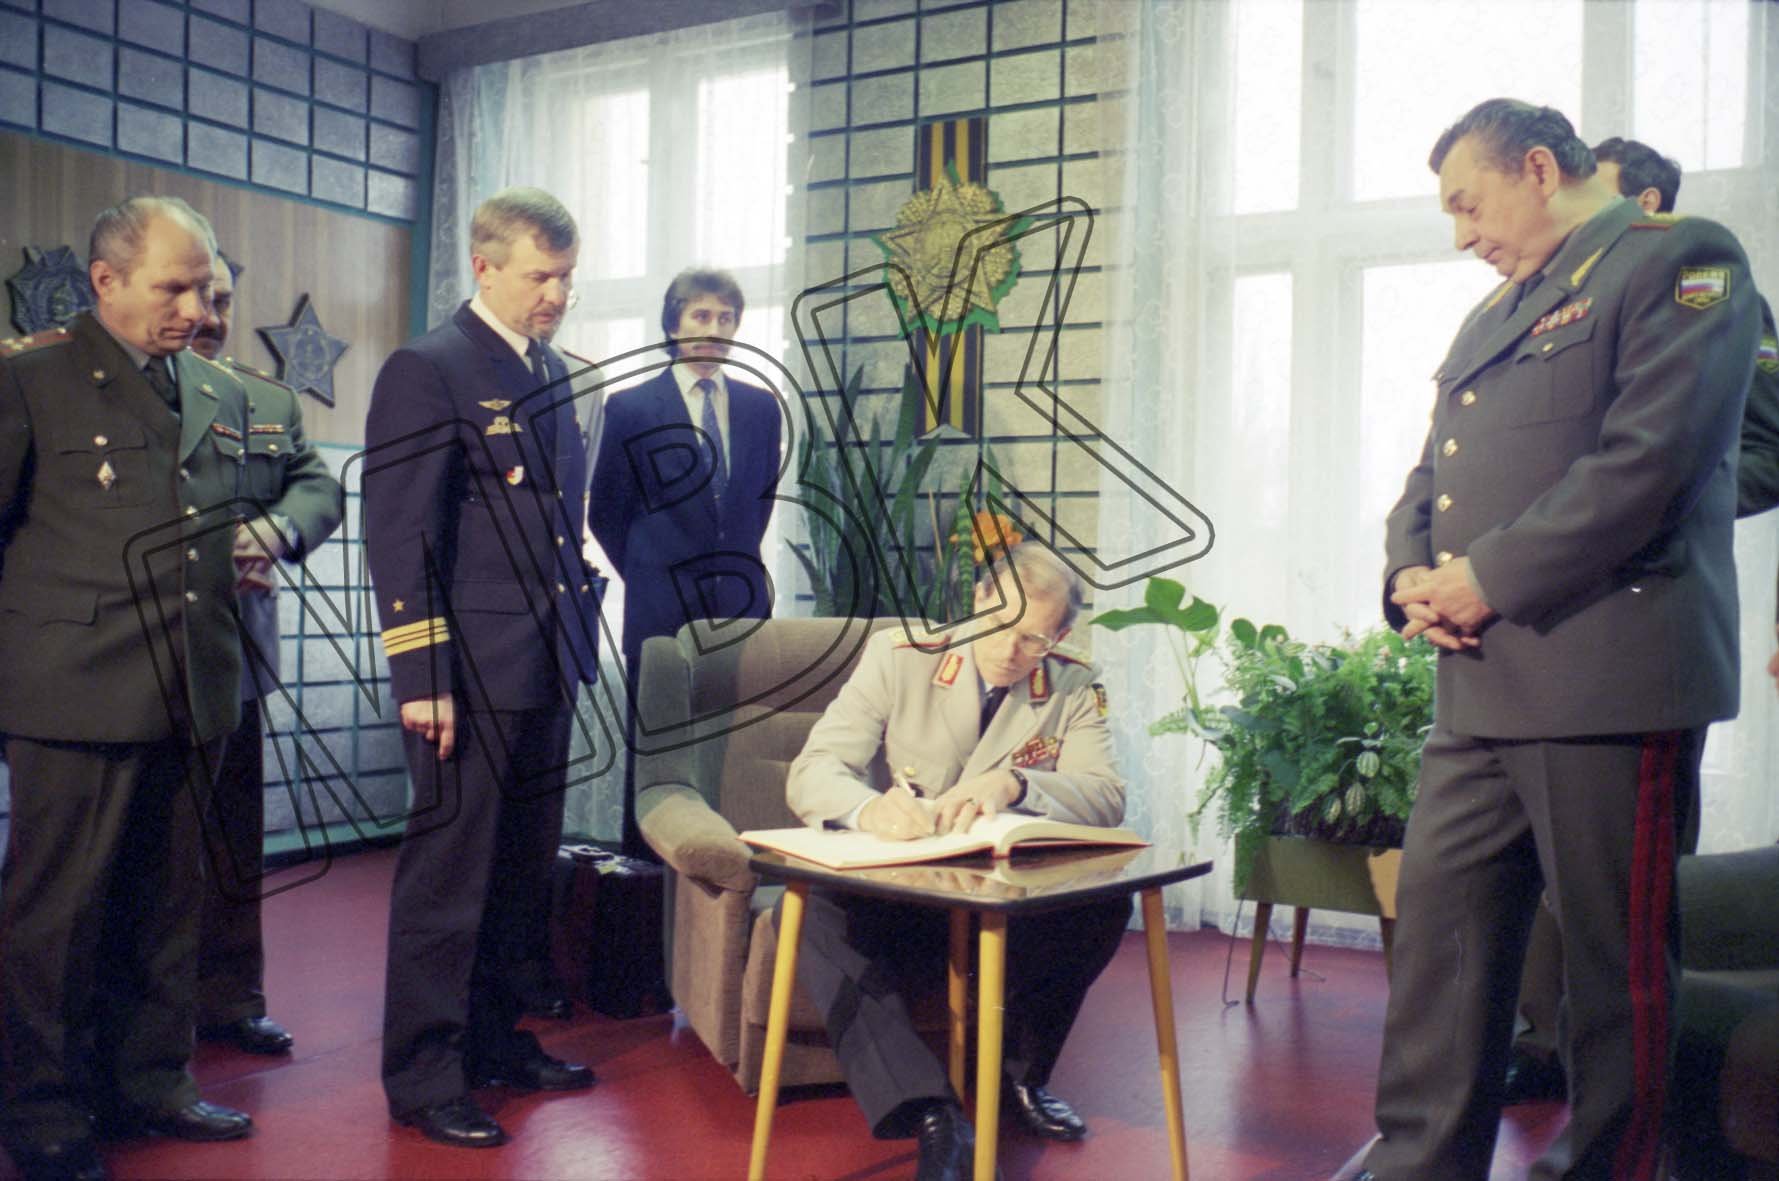 Fotografie: Besuch des Generalinspekteurs der Bundeswehr im Hauptquartier der WGT, Wünsdorf, 27. Januar 1994 (Museum Berlin-Karlshorst RR-P)